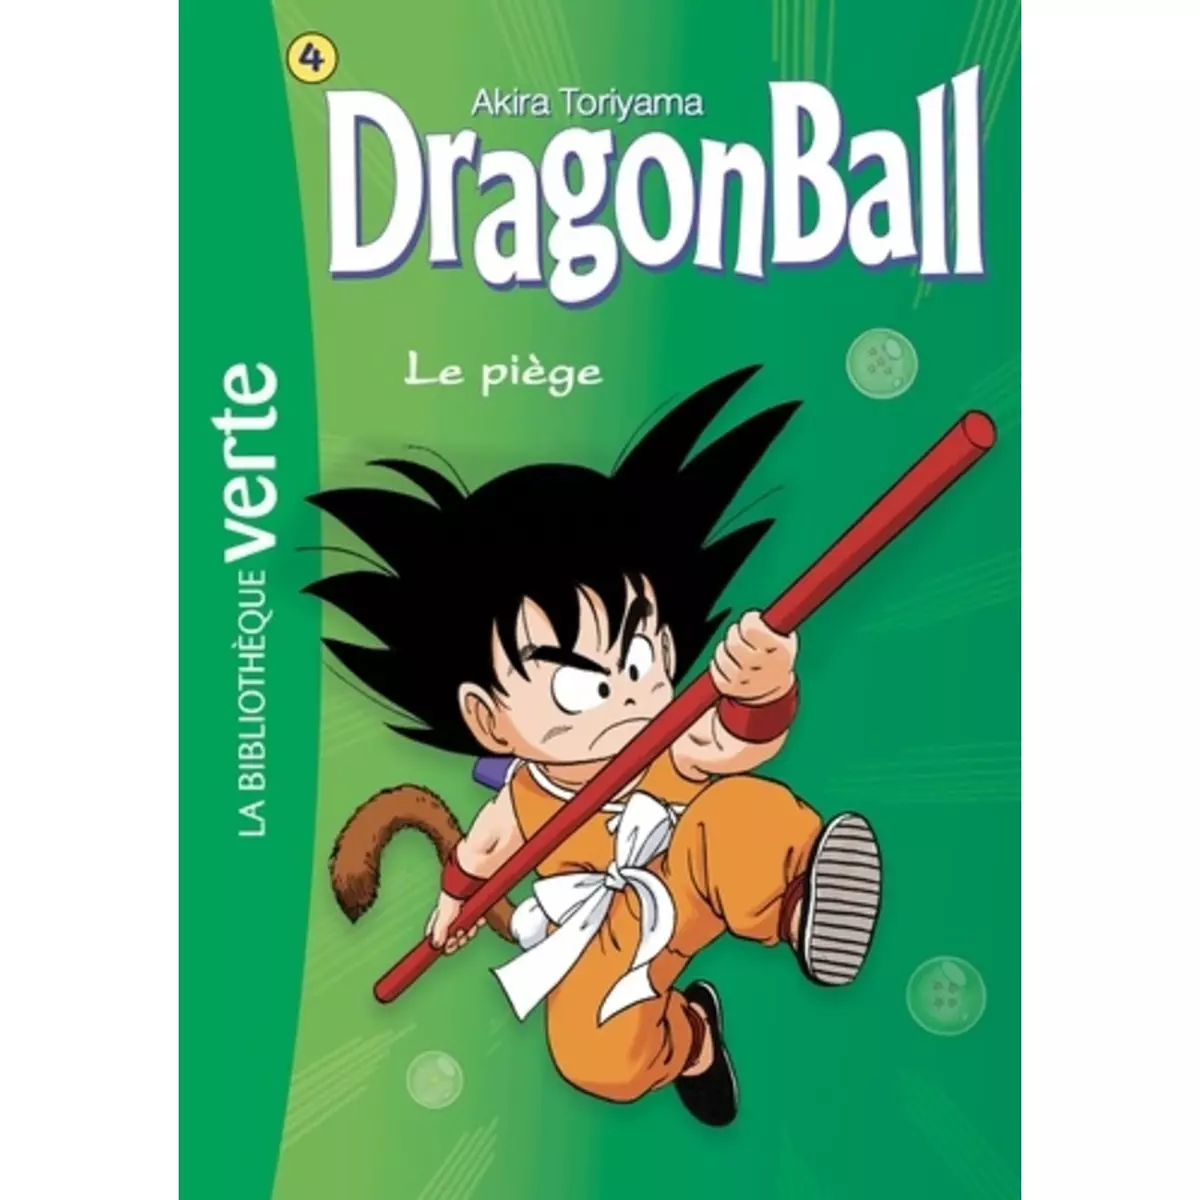  DRAGON BALL TOME 4 : LE PIEGE, Toriyama Akira